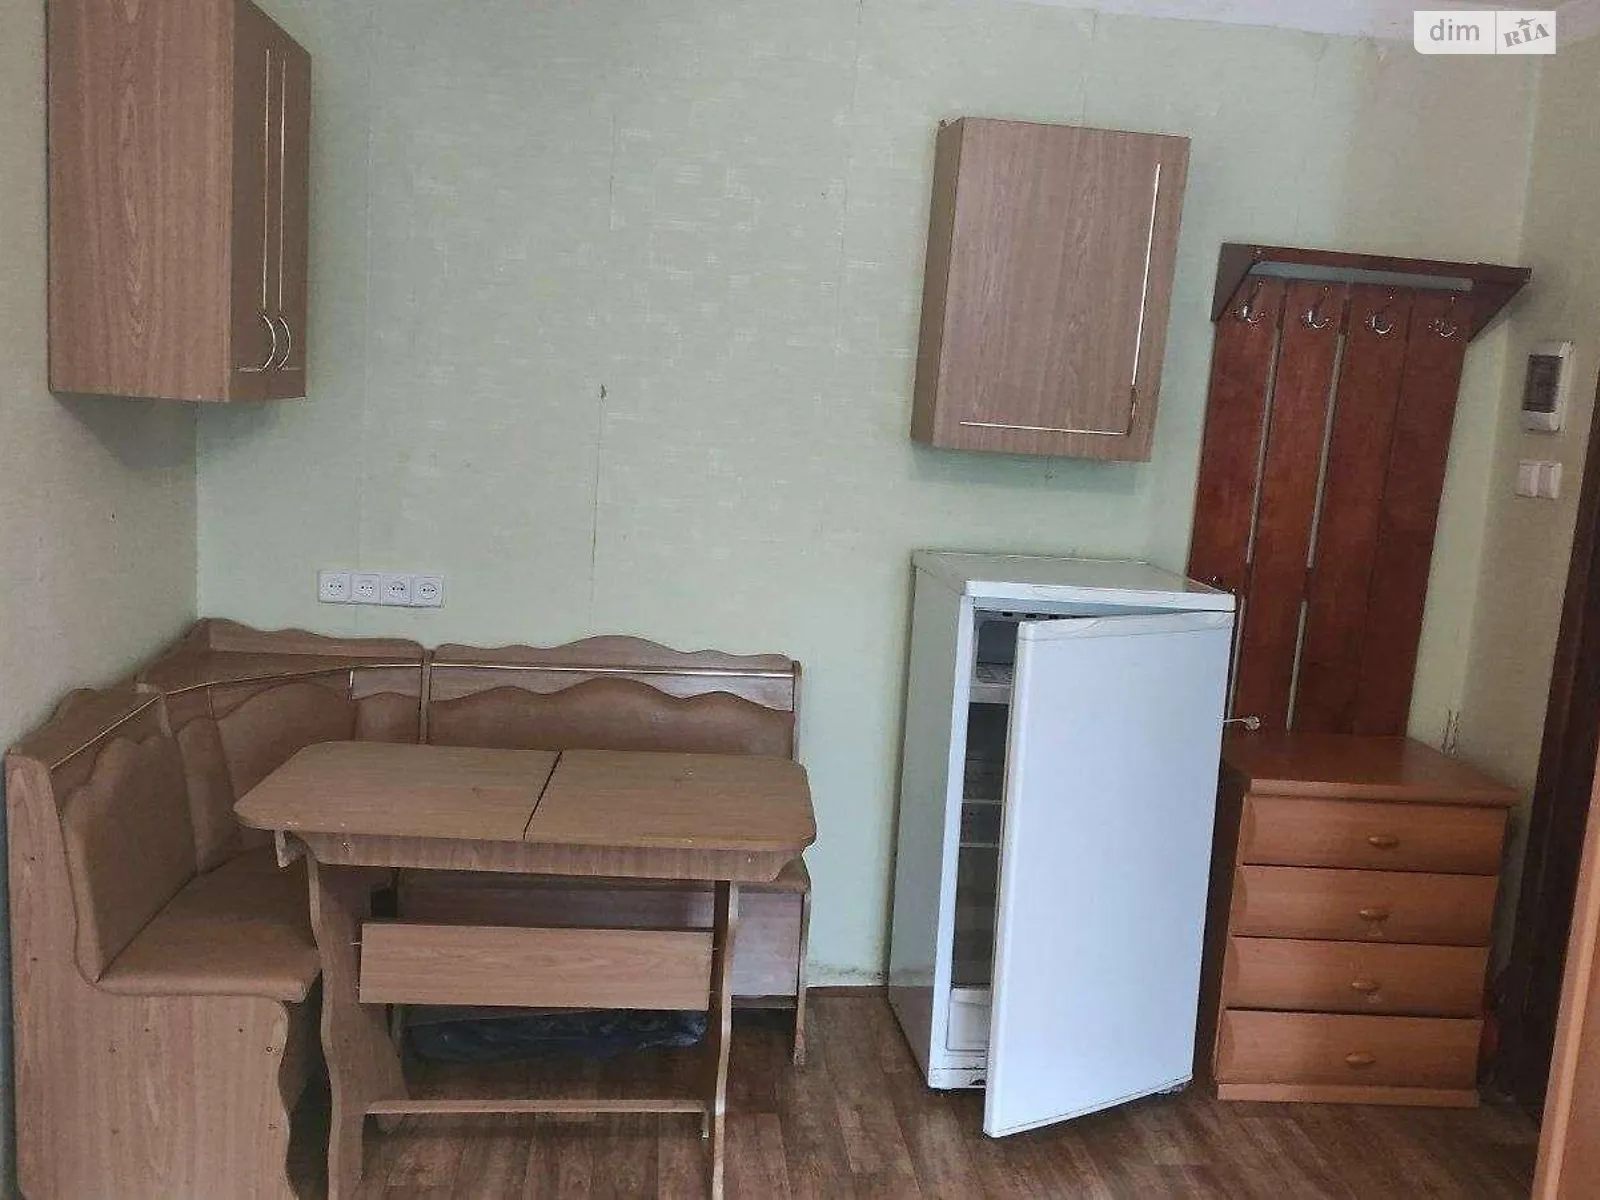 Продается комната 25 кв. м в Харькове - фото 3